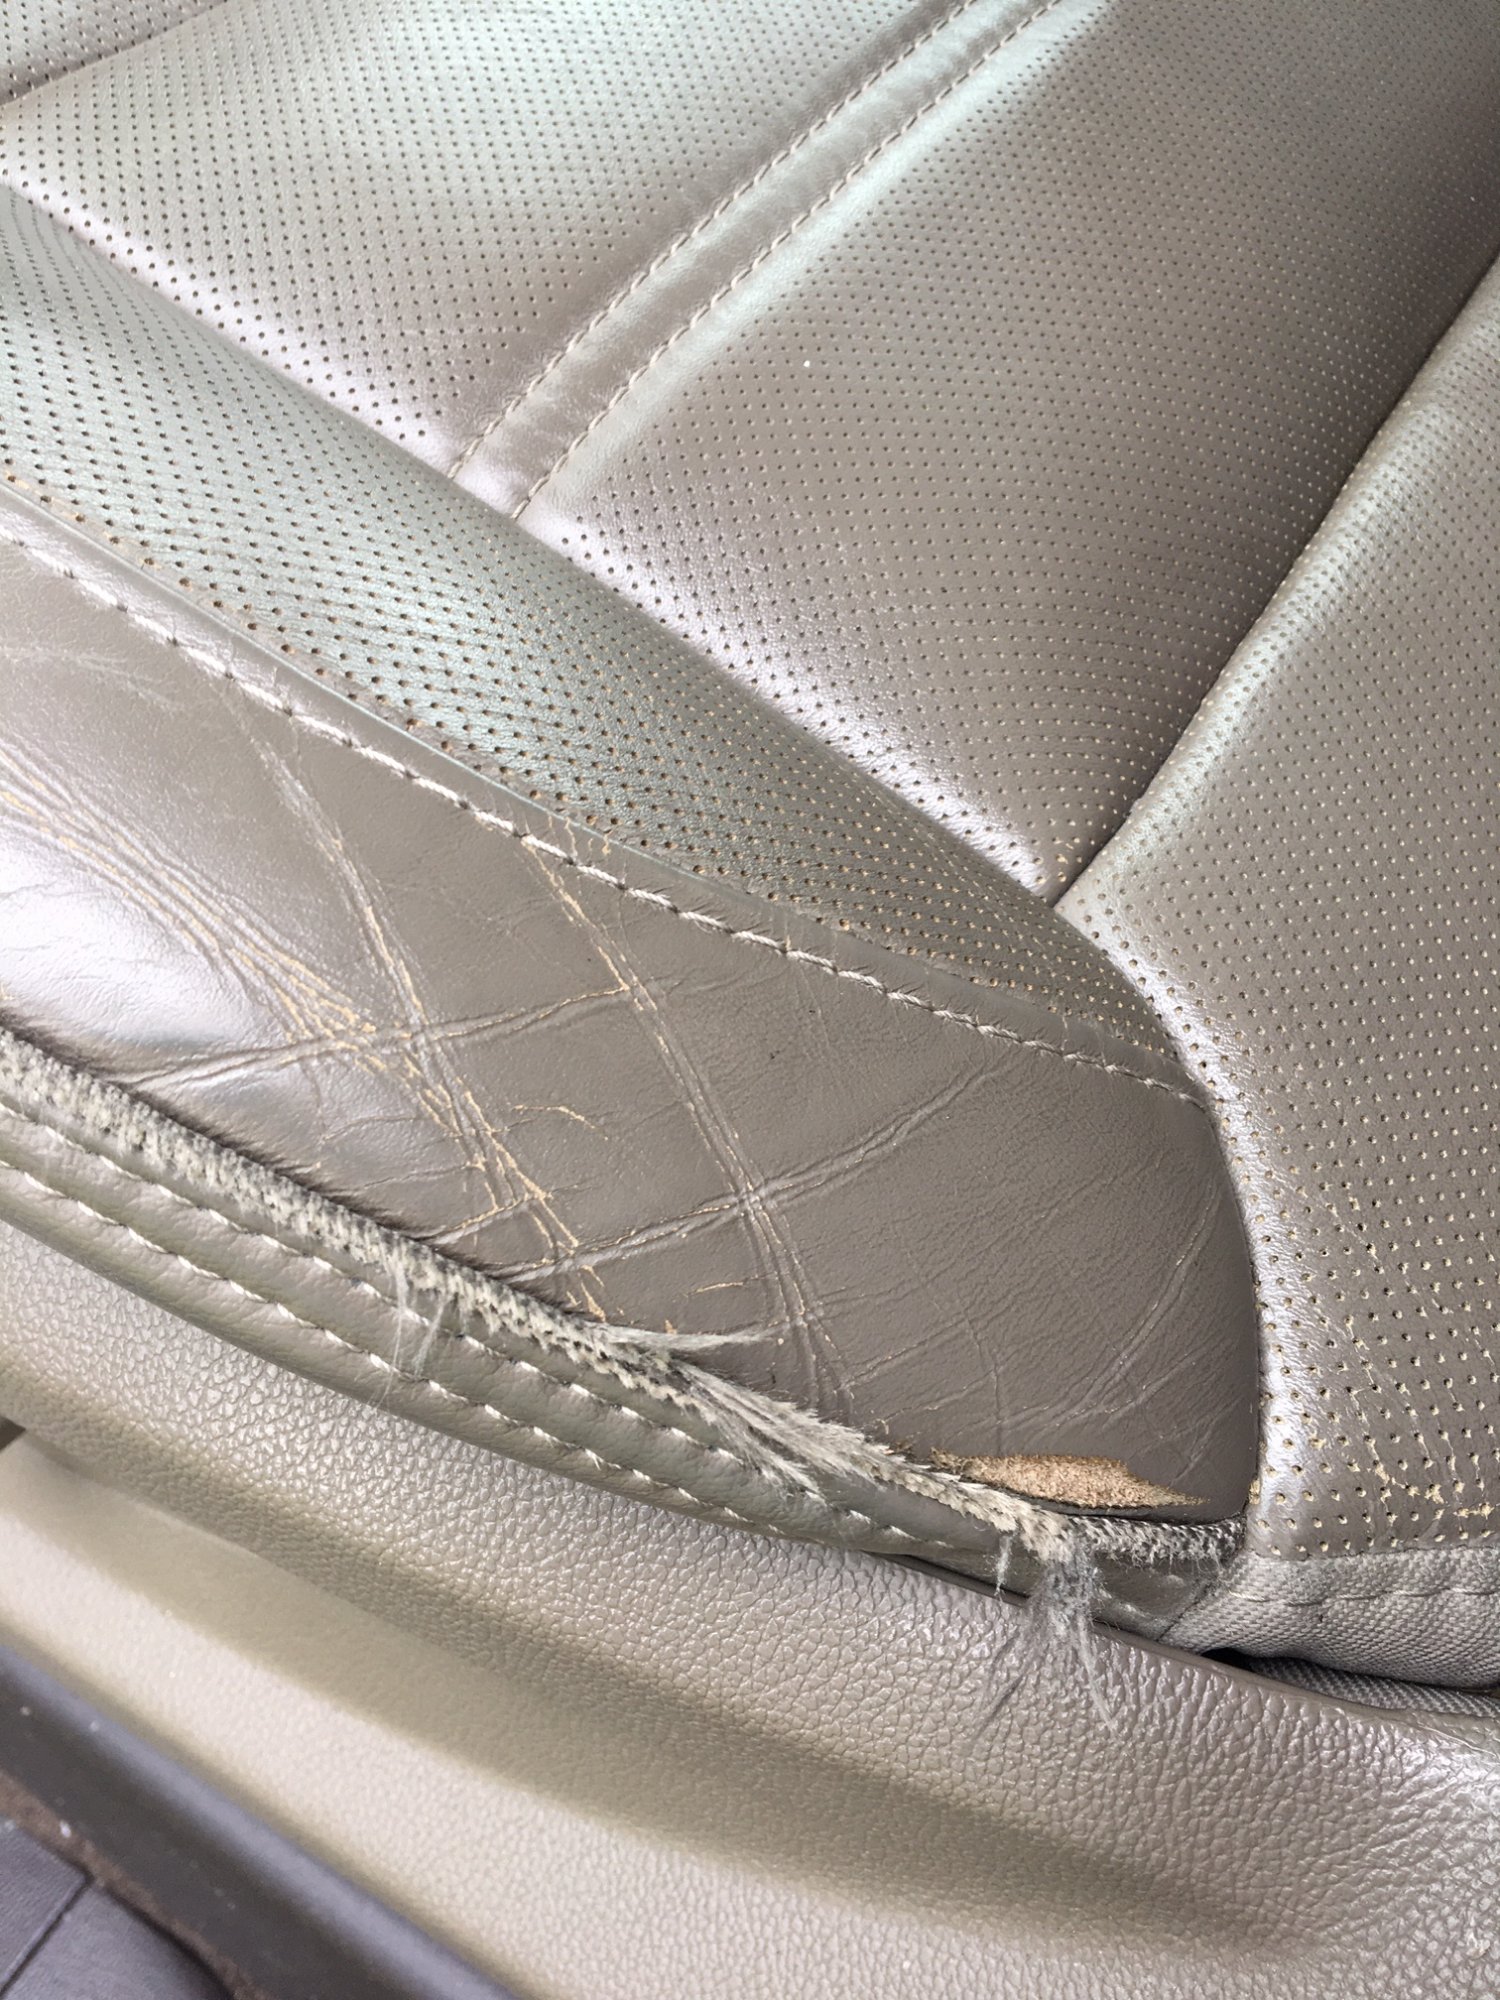 Leather seatrip repair? - 2014-2018 Silverado & Sierra Mods 